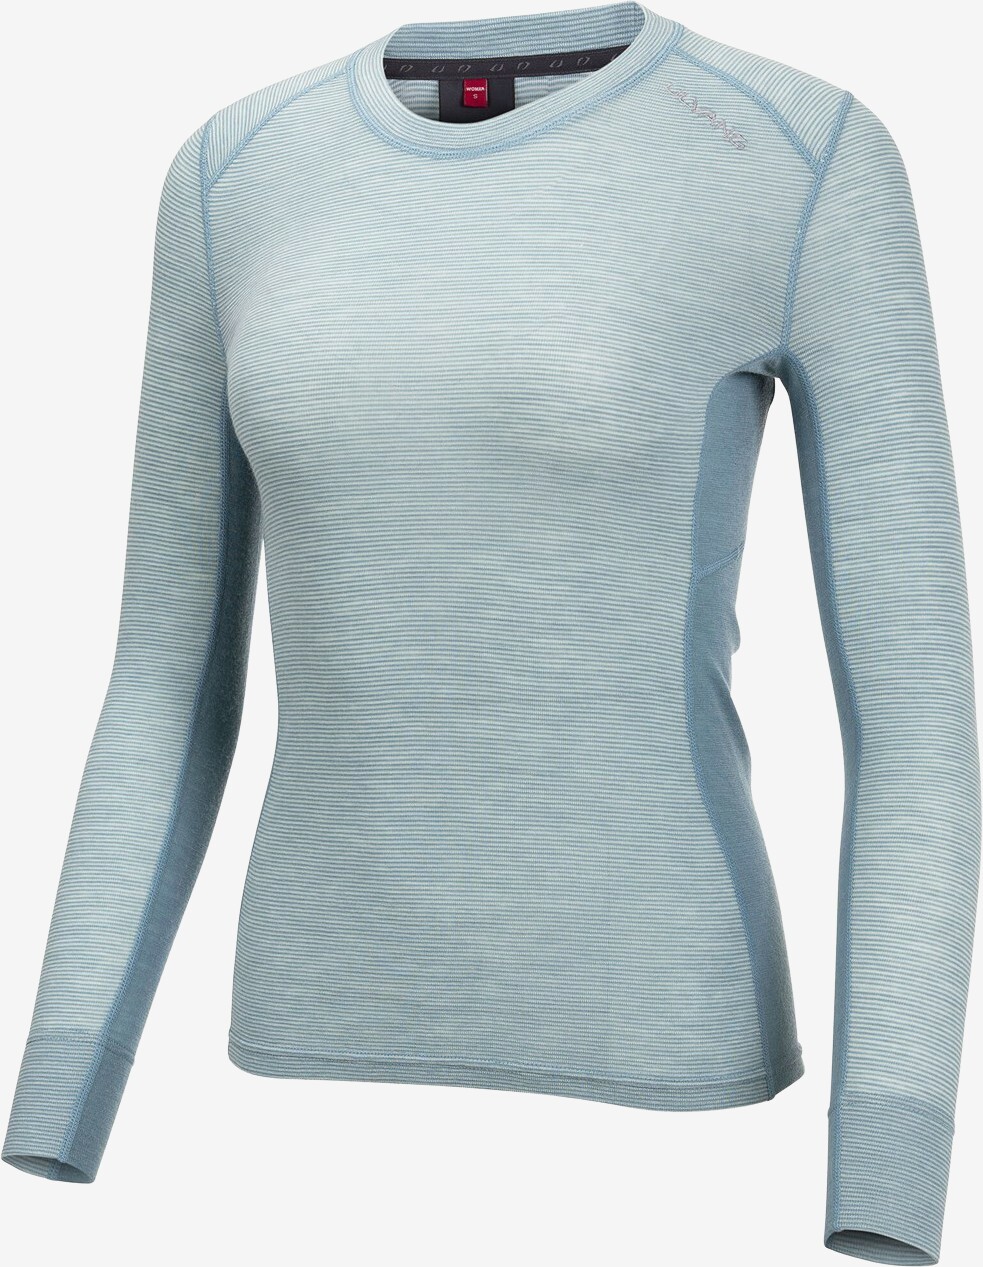 Ulvang - Rav 100% dametrøje (Blå) - XL